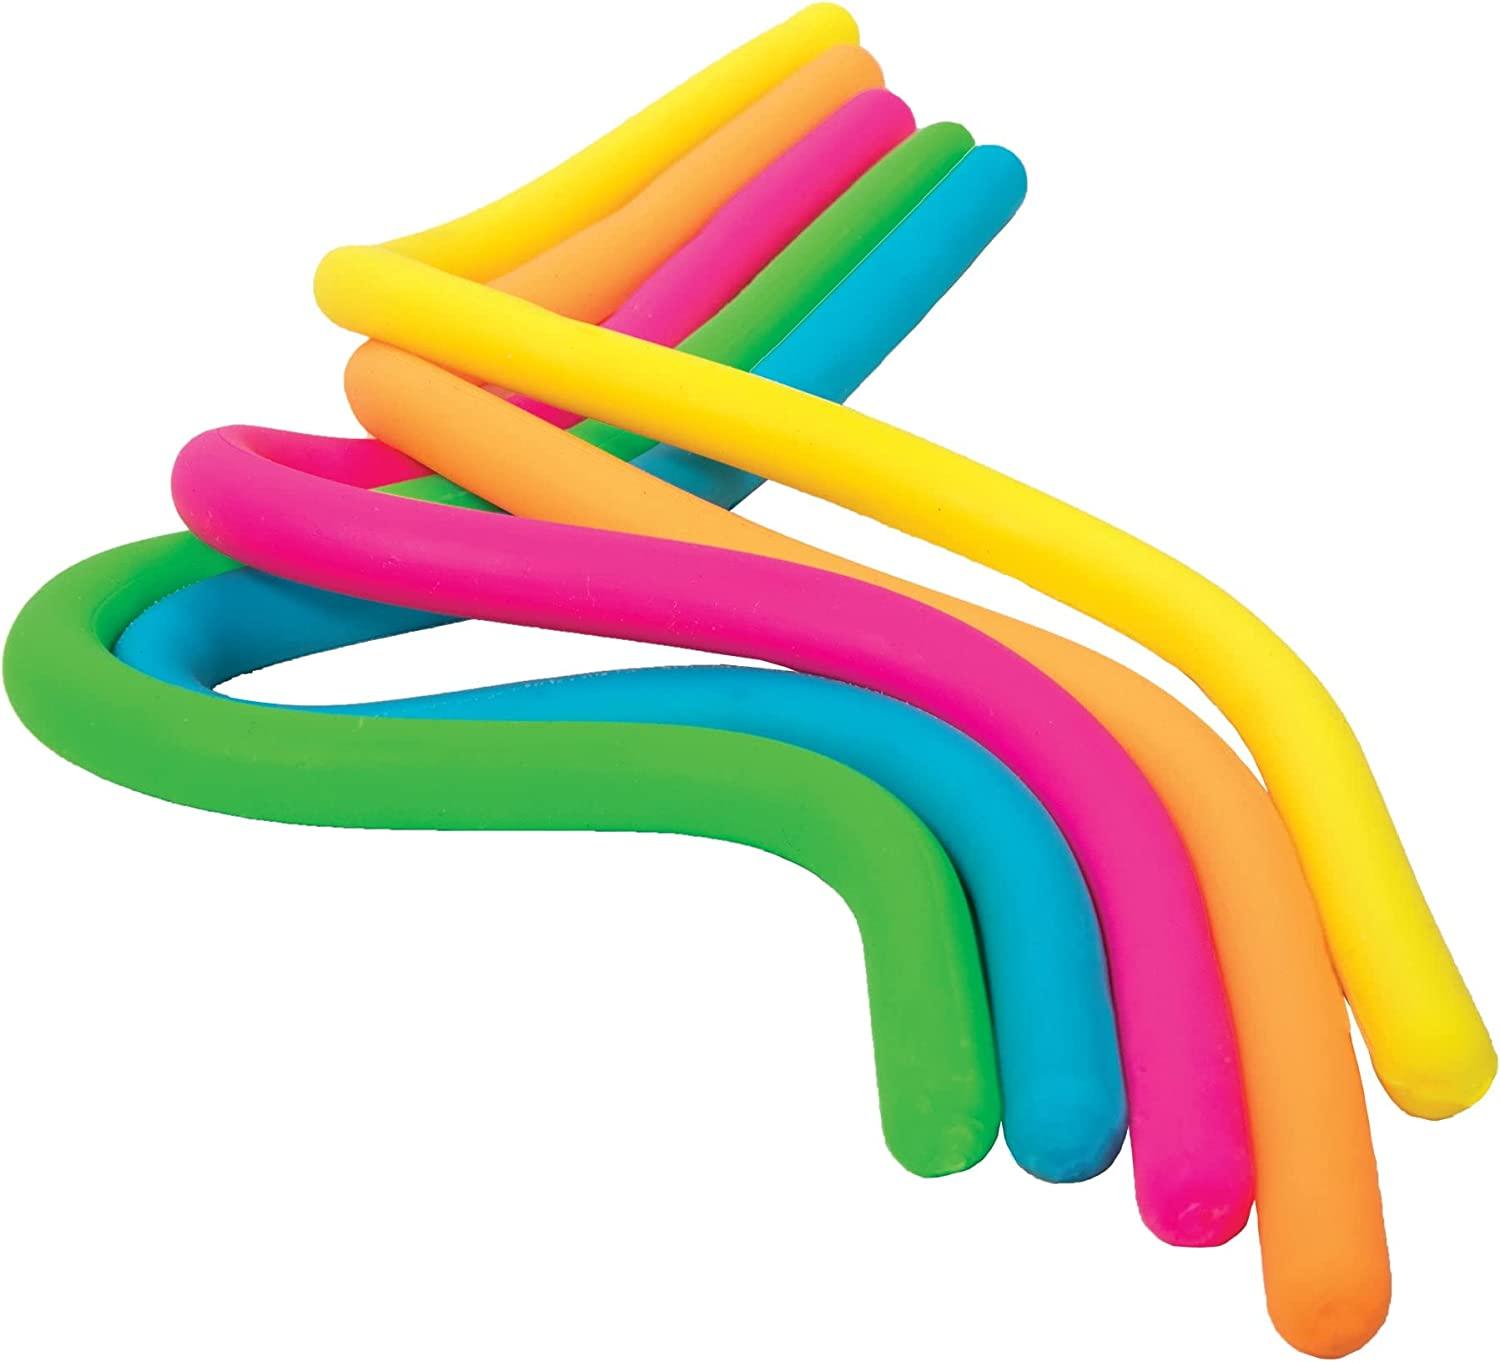 Bright noodle-like fidget toys.